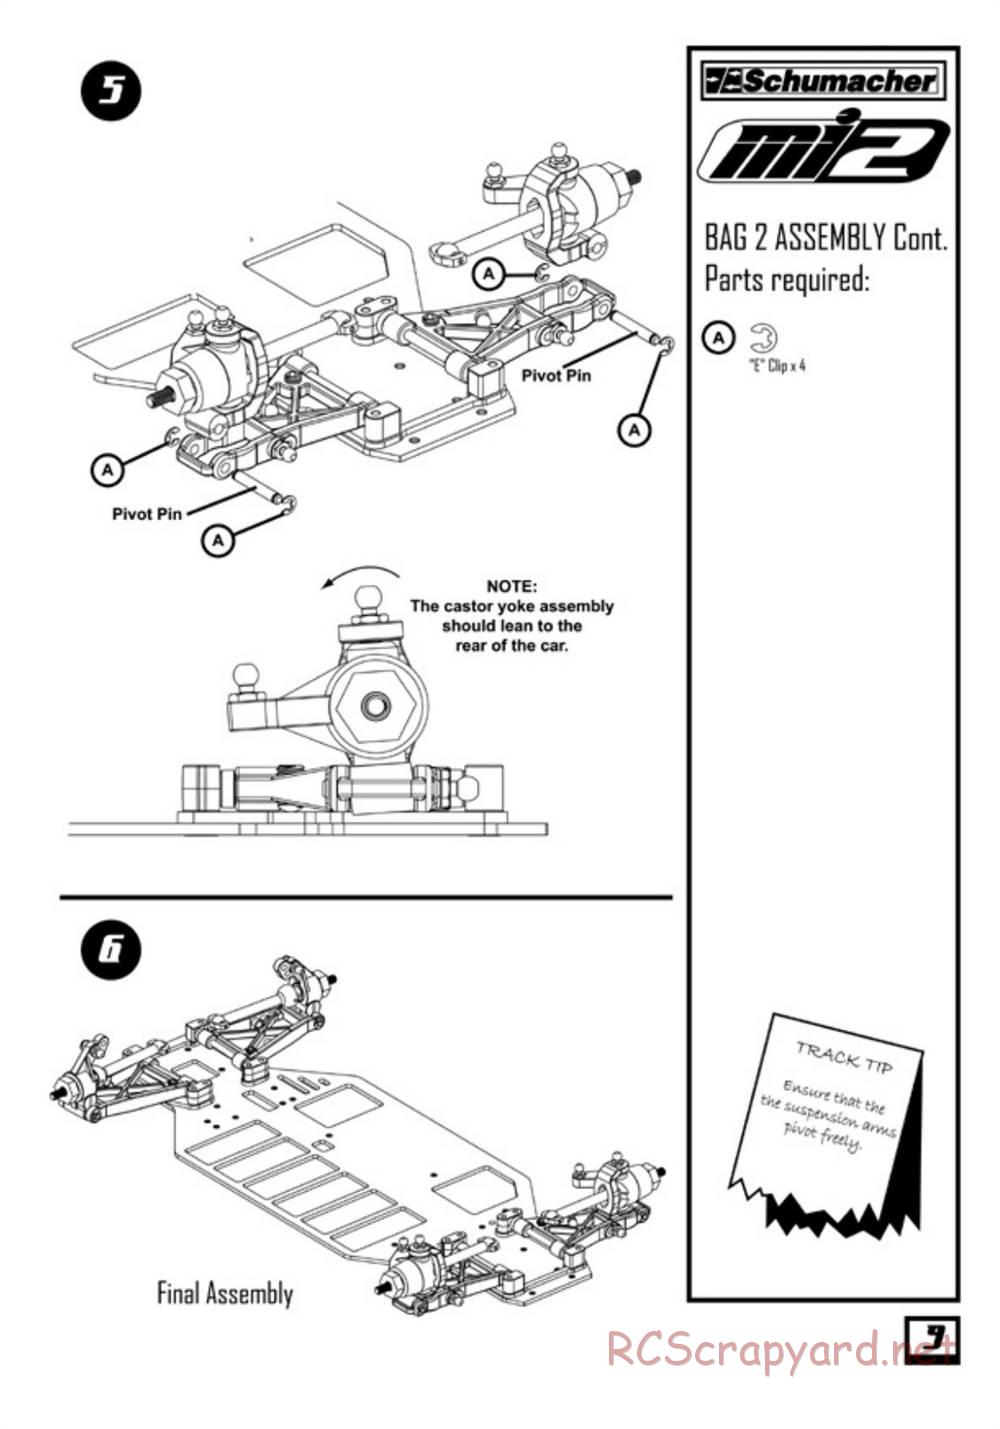 Schumacher - Mi2 - Manual - Page 11